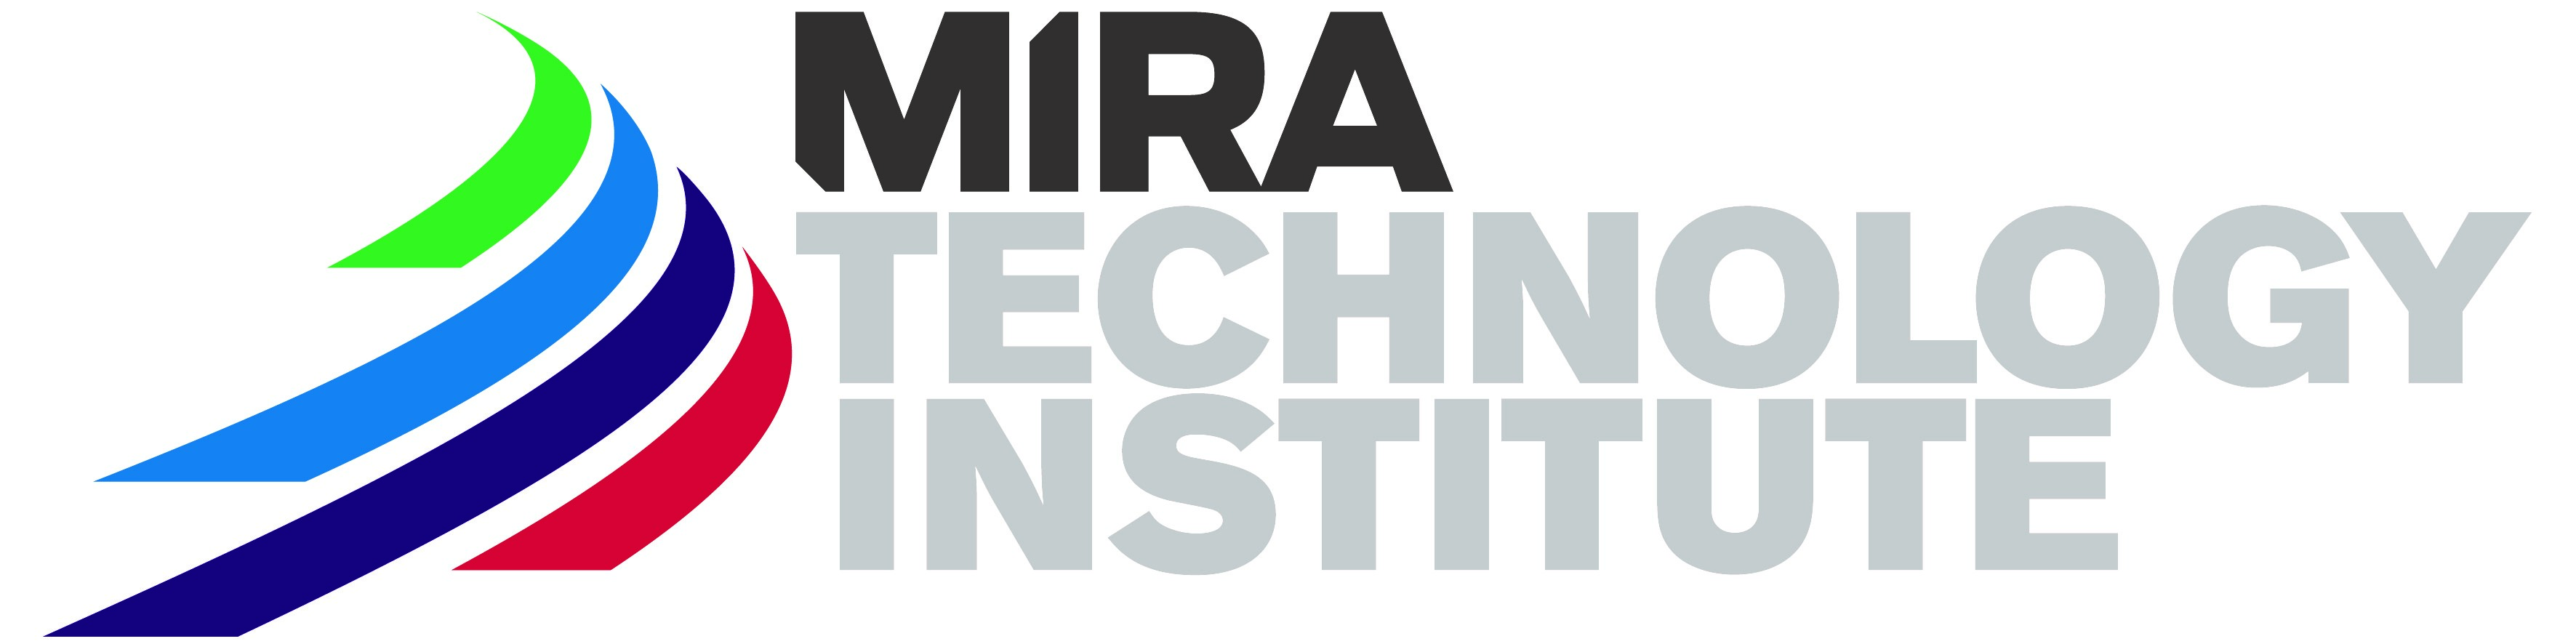 MIRA Technology Institute